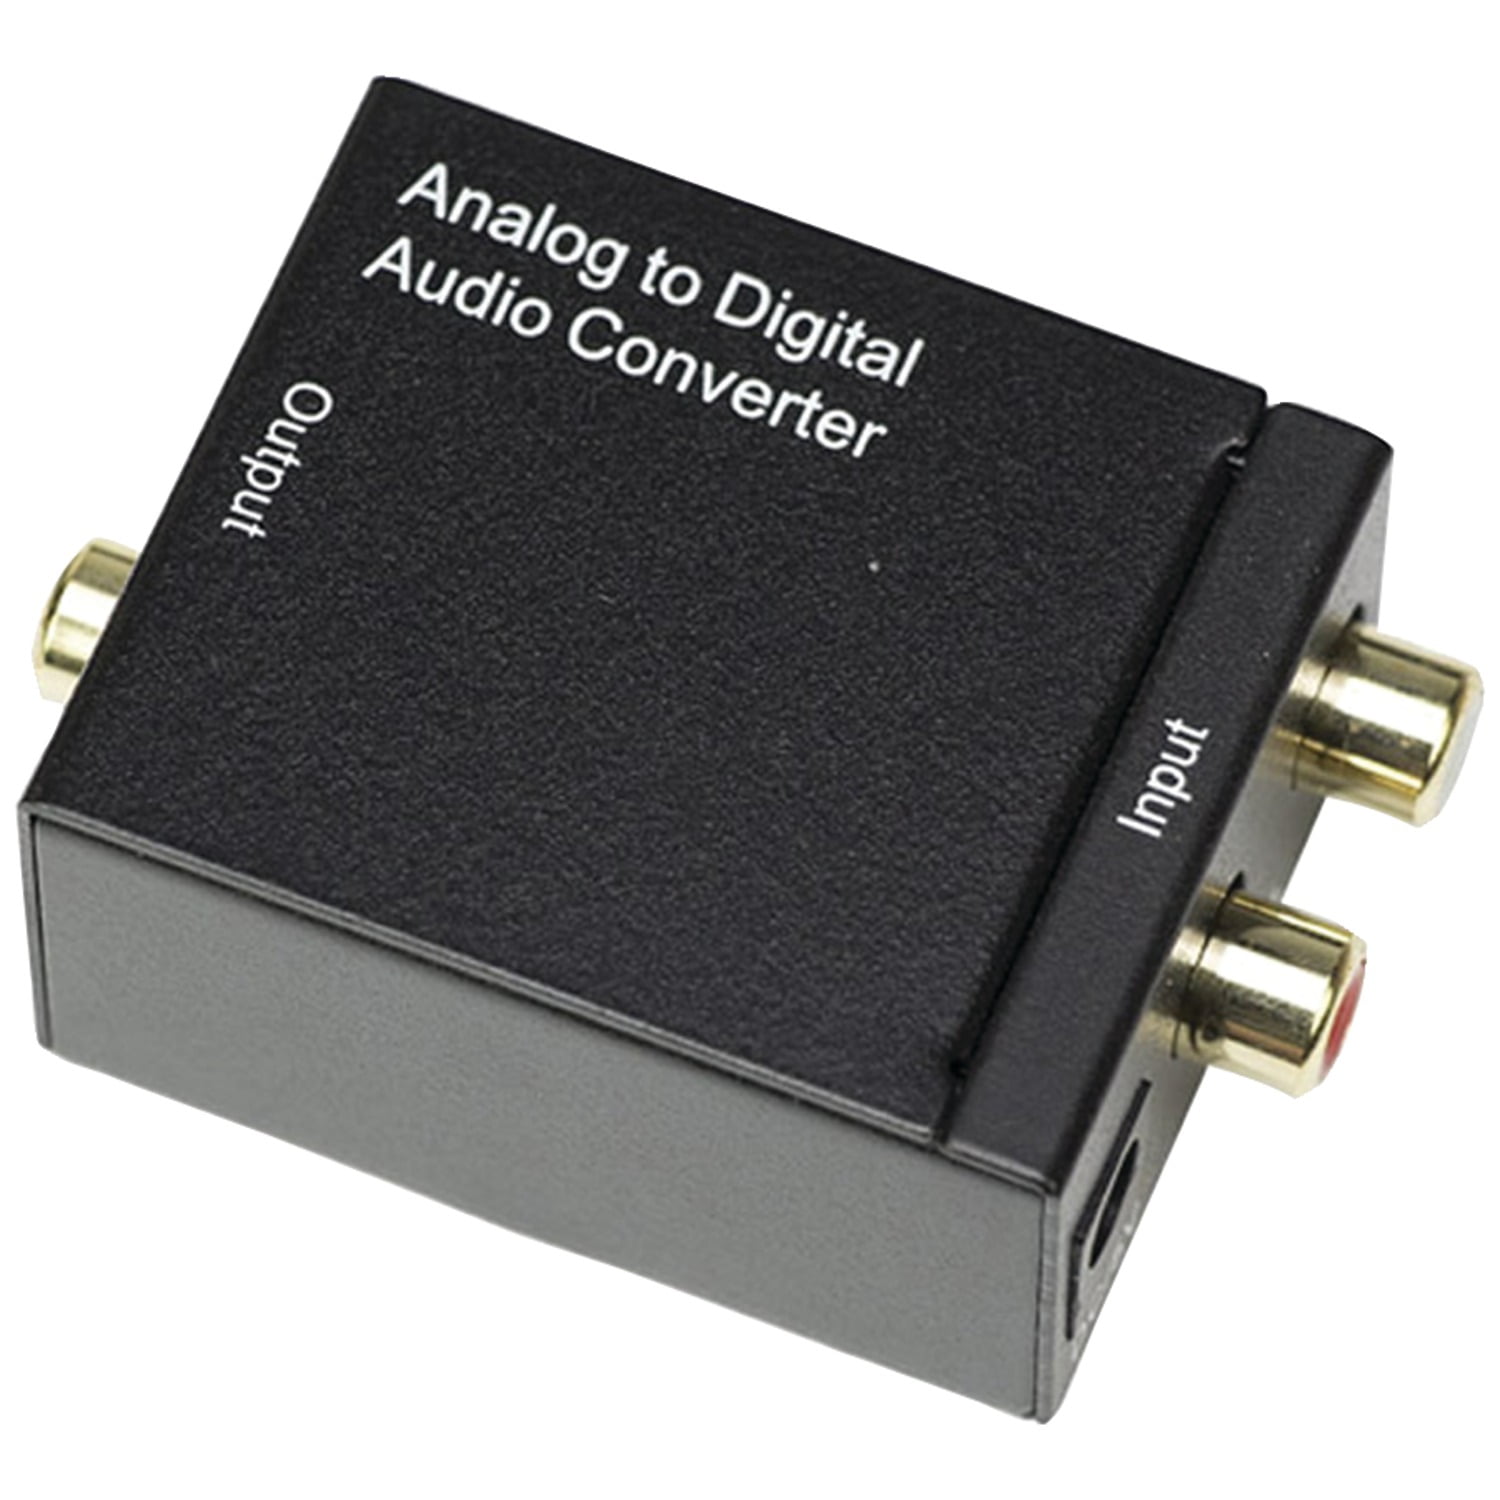 analog to digital audio converter software free download